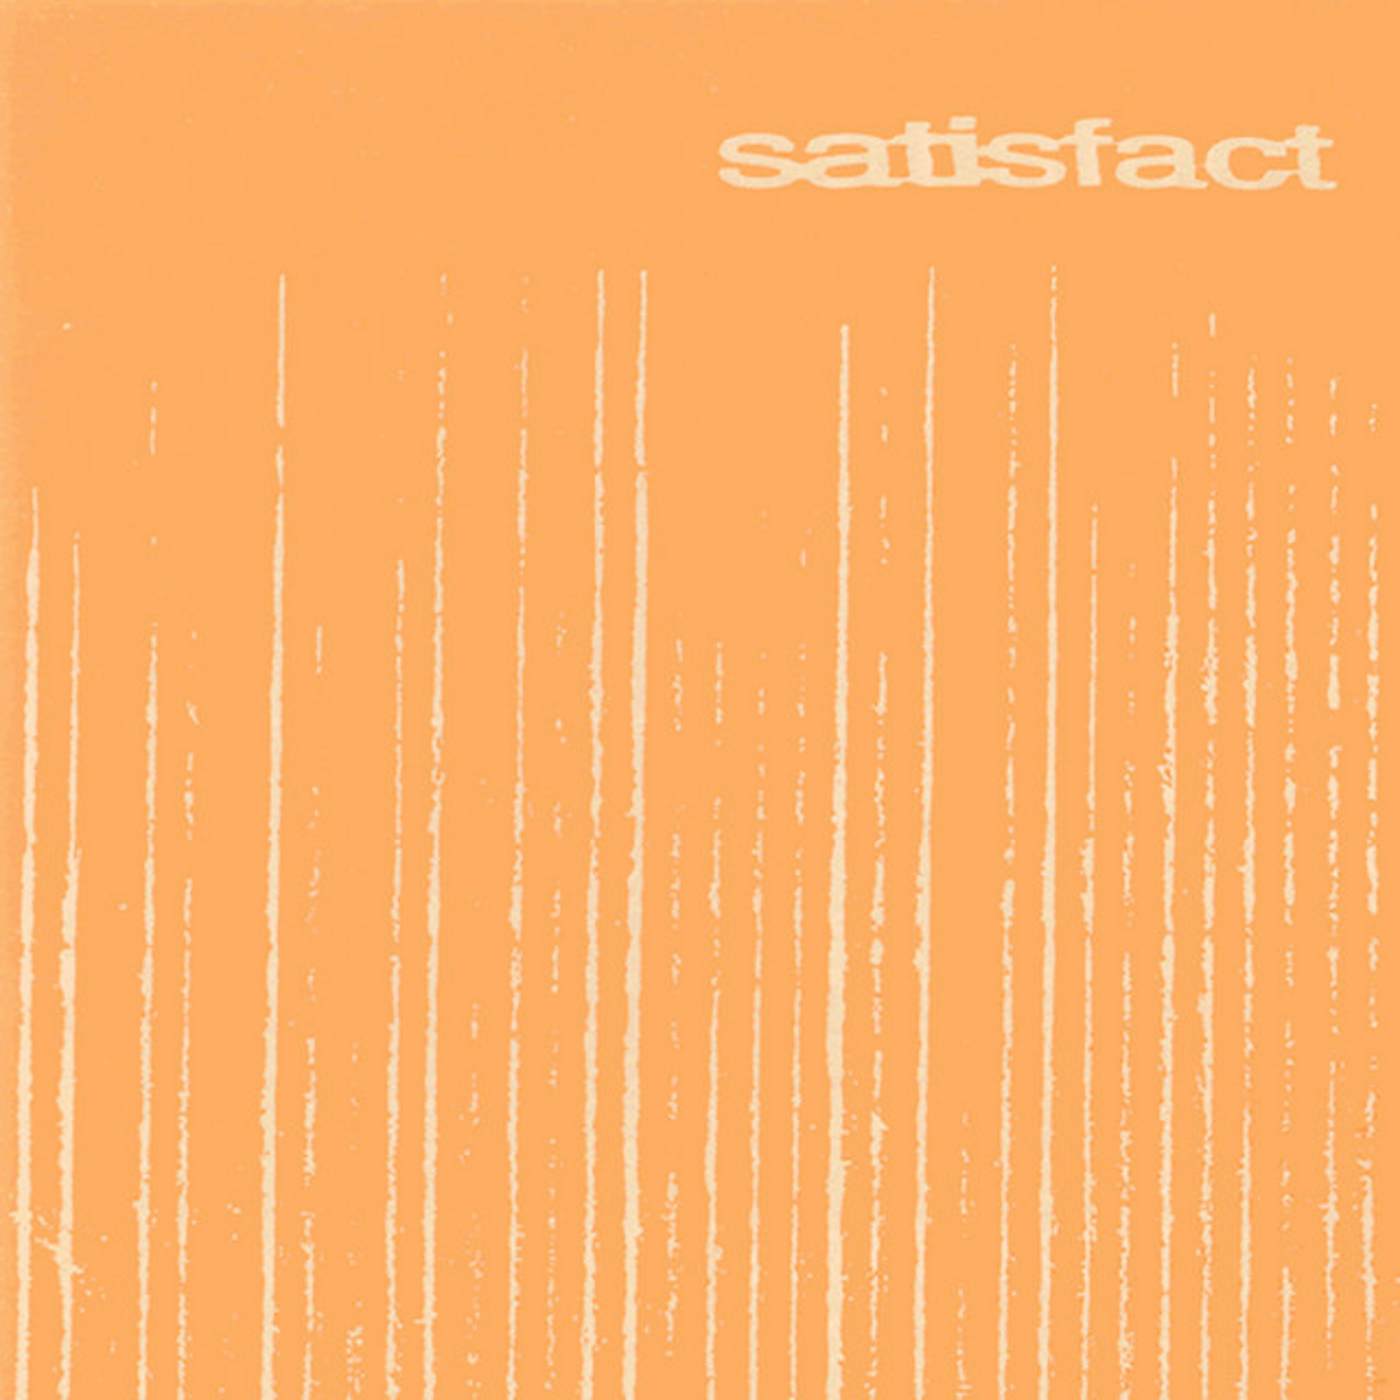 SATISFACT CD